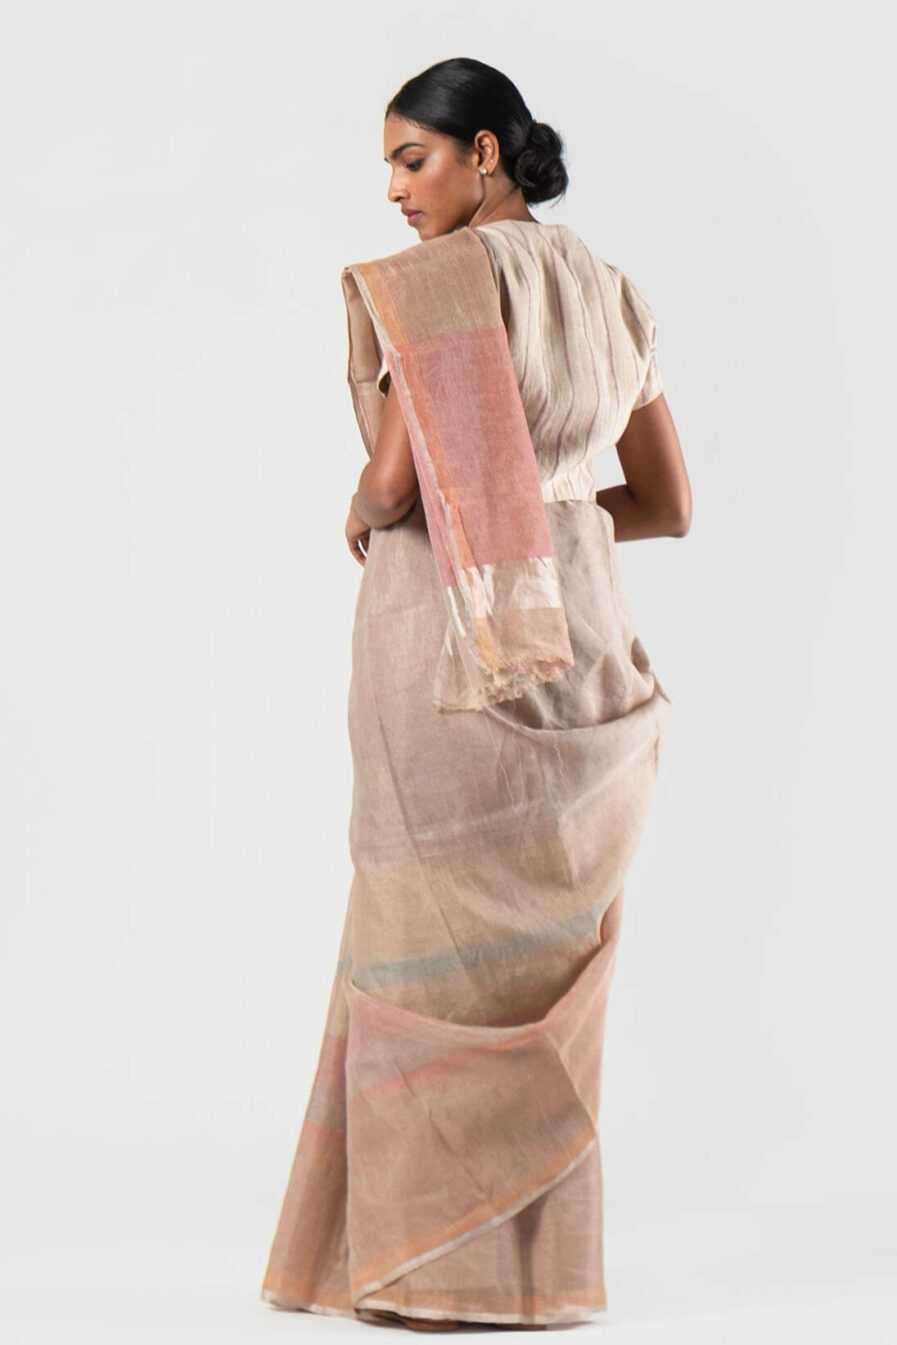 Anavila Natural pink Autumn stripe zari sari